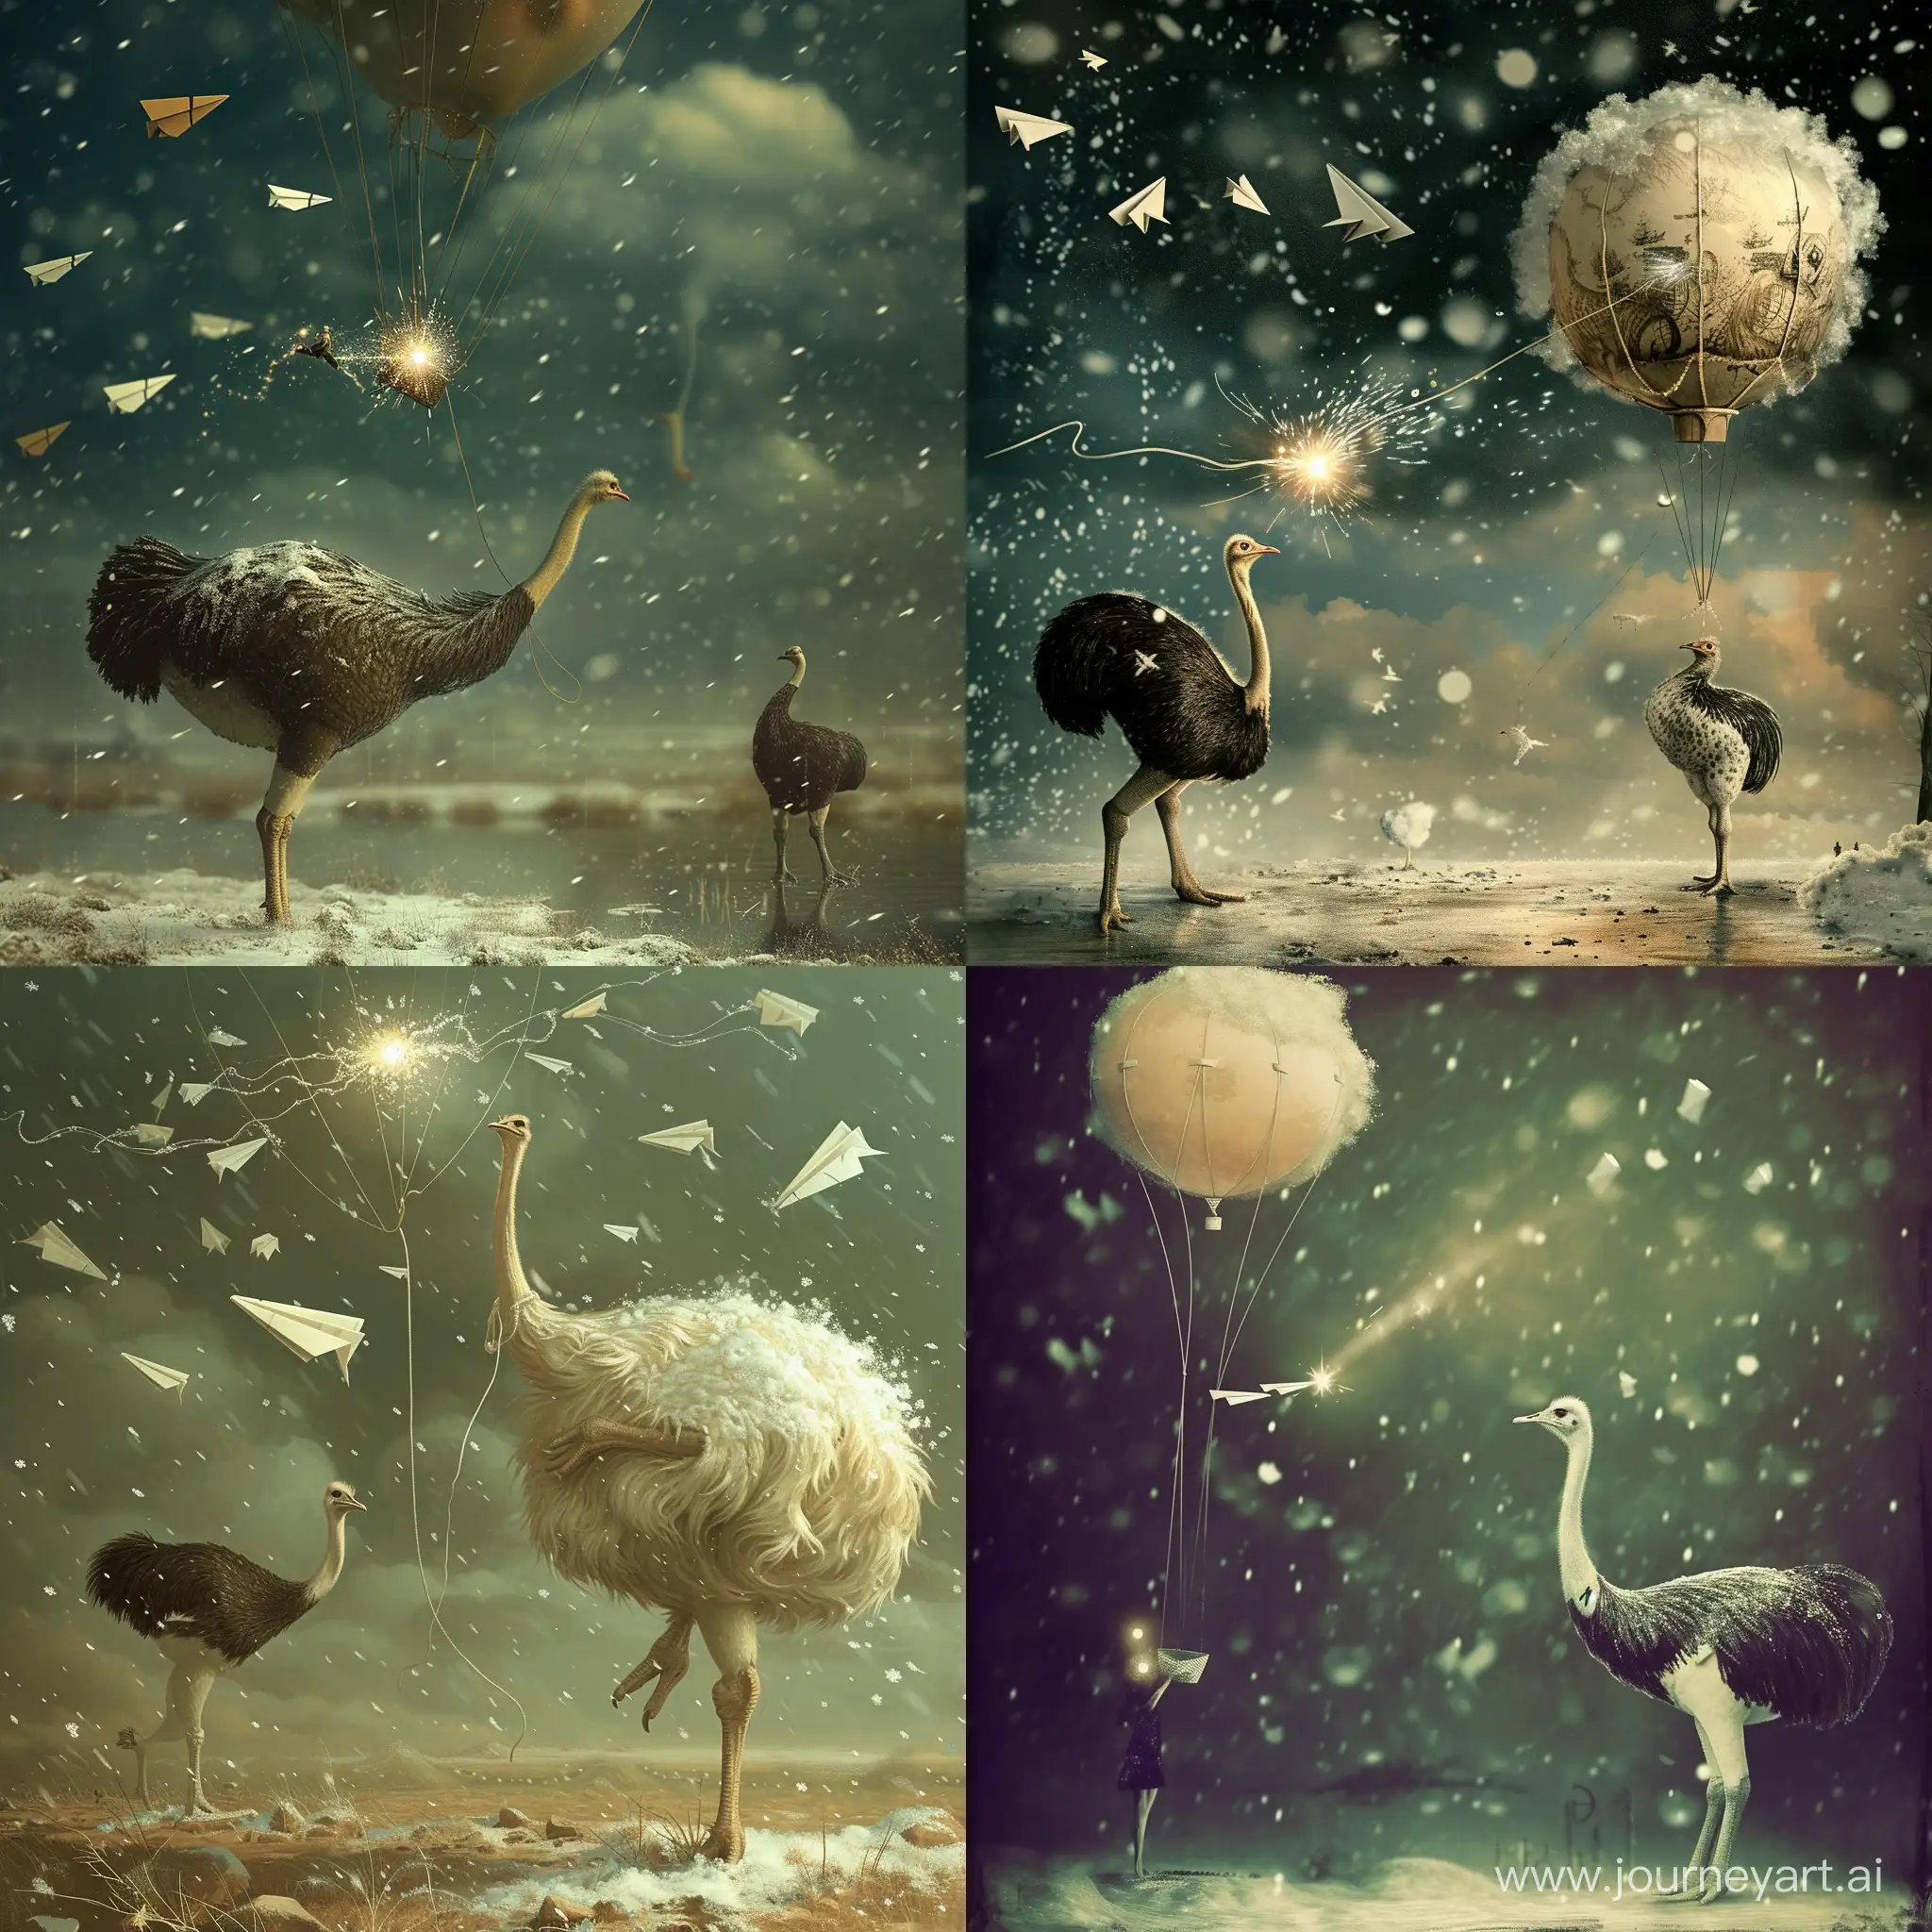 Enchanting-Journey-Sparkpowered-Balloon-Flight-in-a-Snowy-Wonderland